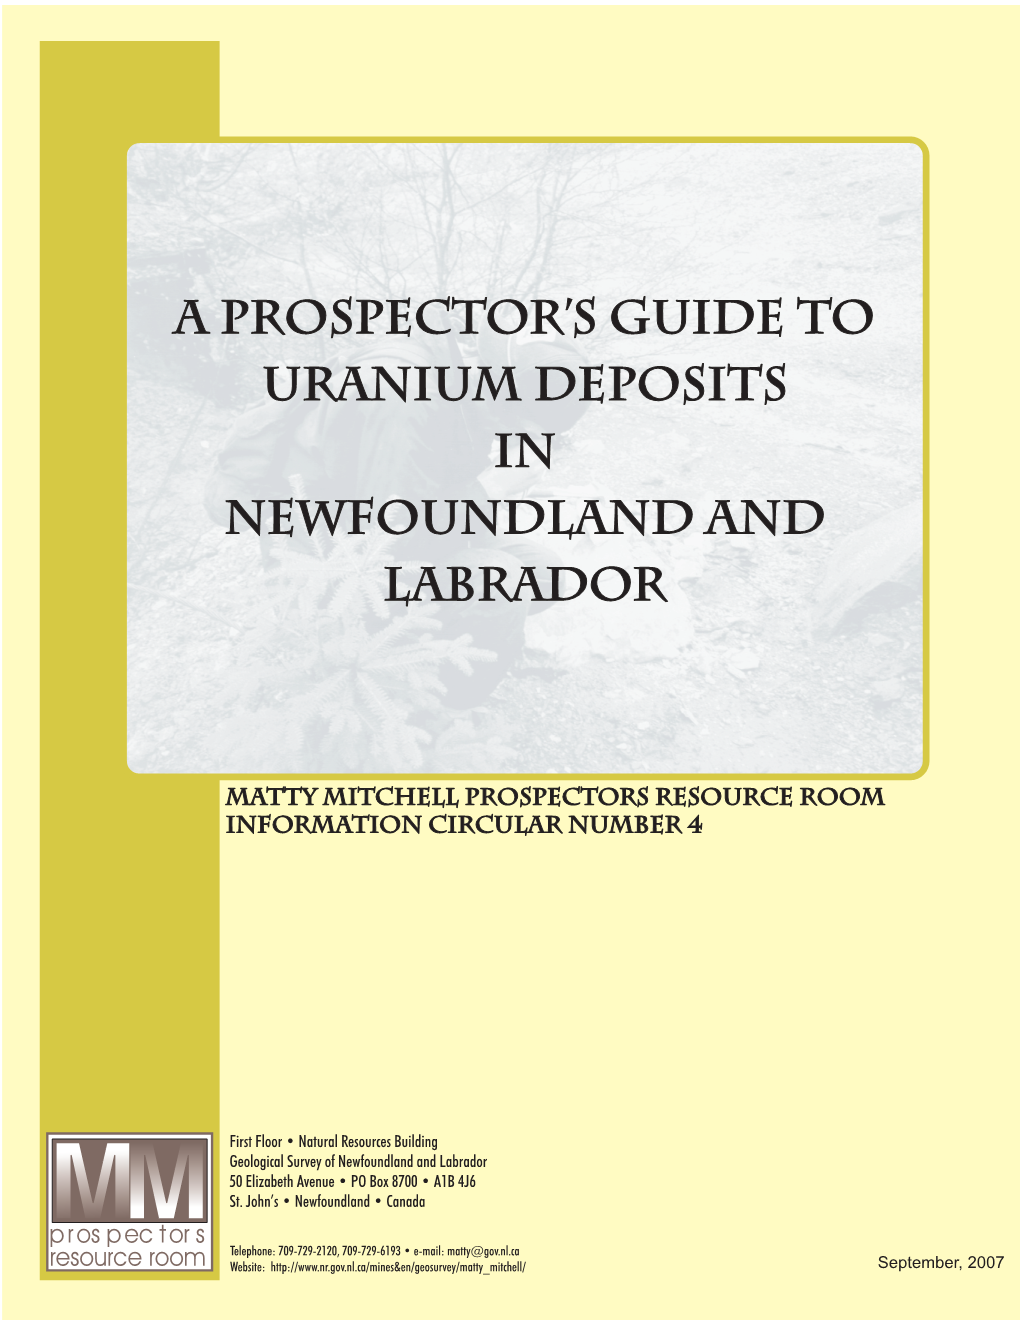 A Prospector's Guide to URANIUM Deposits in Newfoundland and Labrador